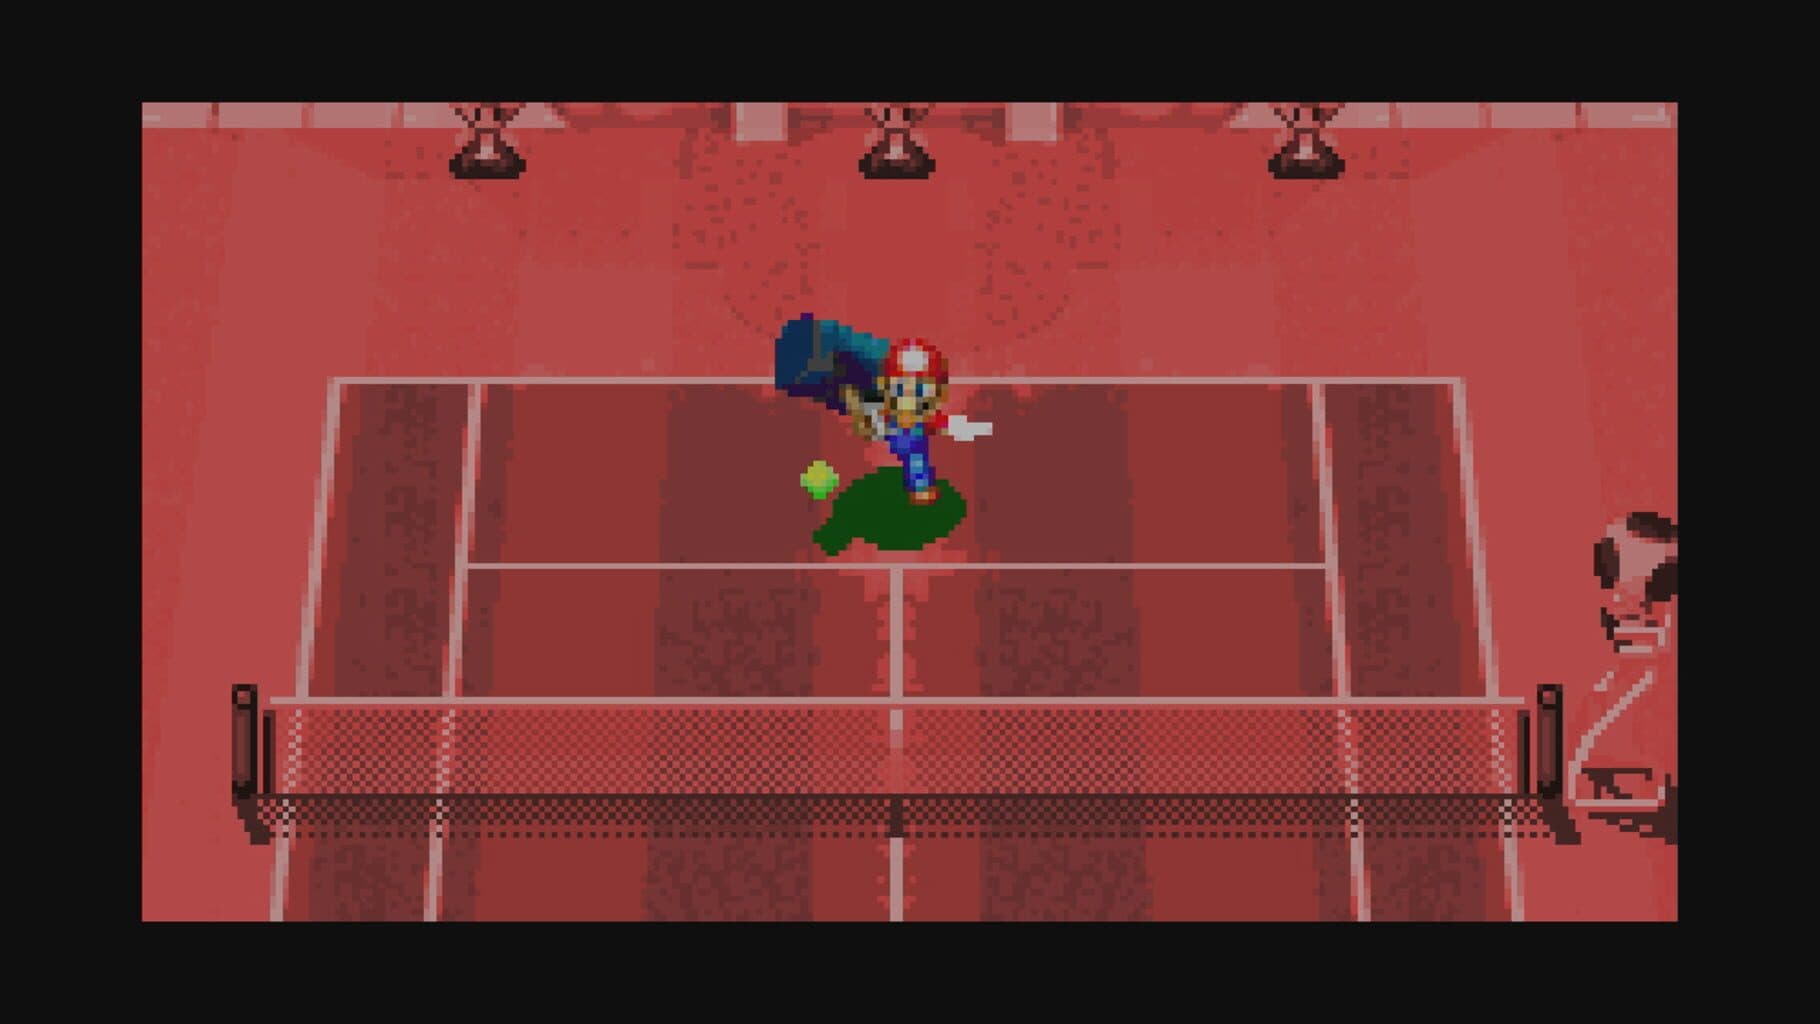 Mario Tennis: Power Tour Image